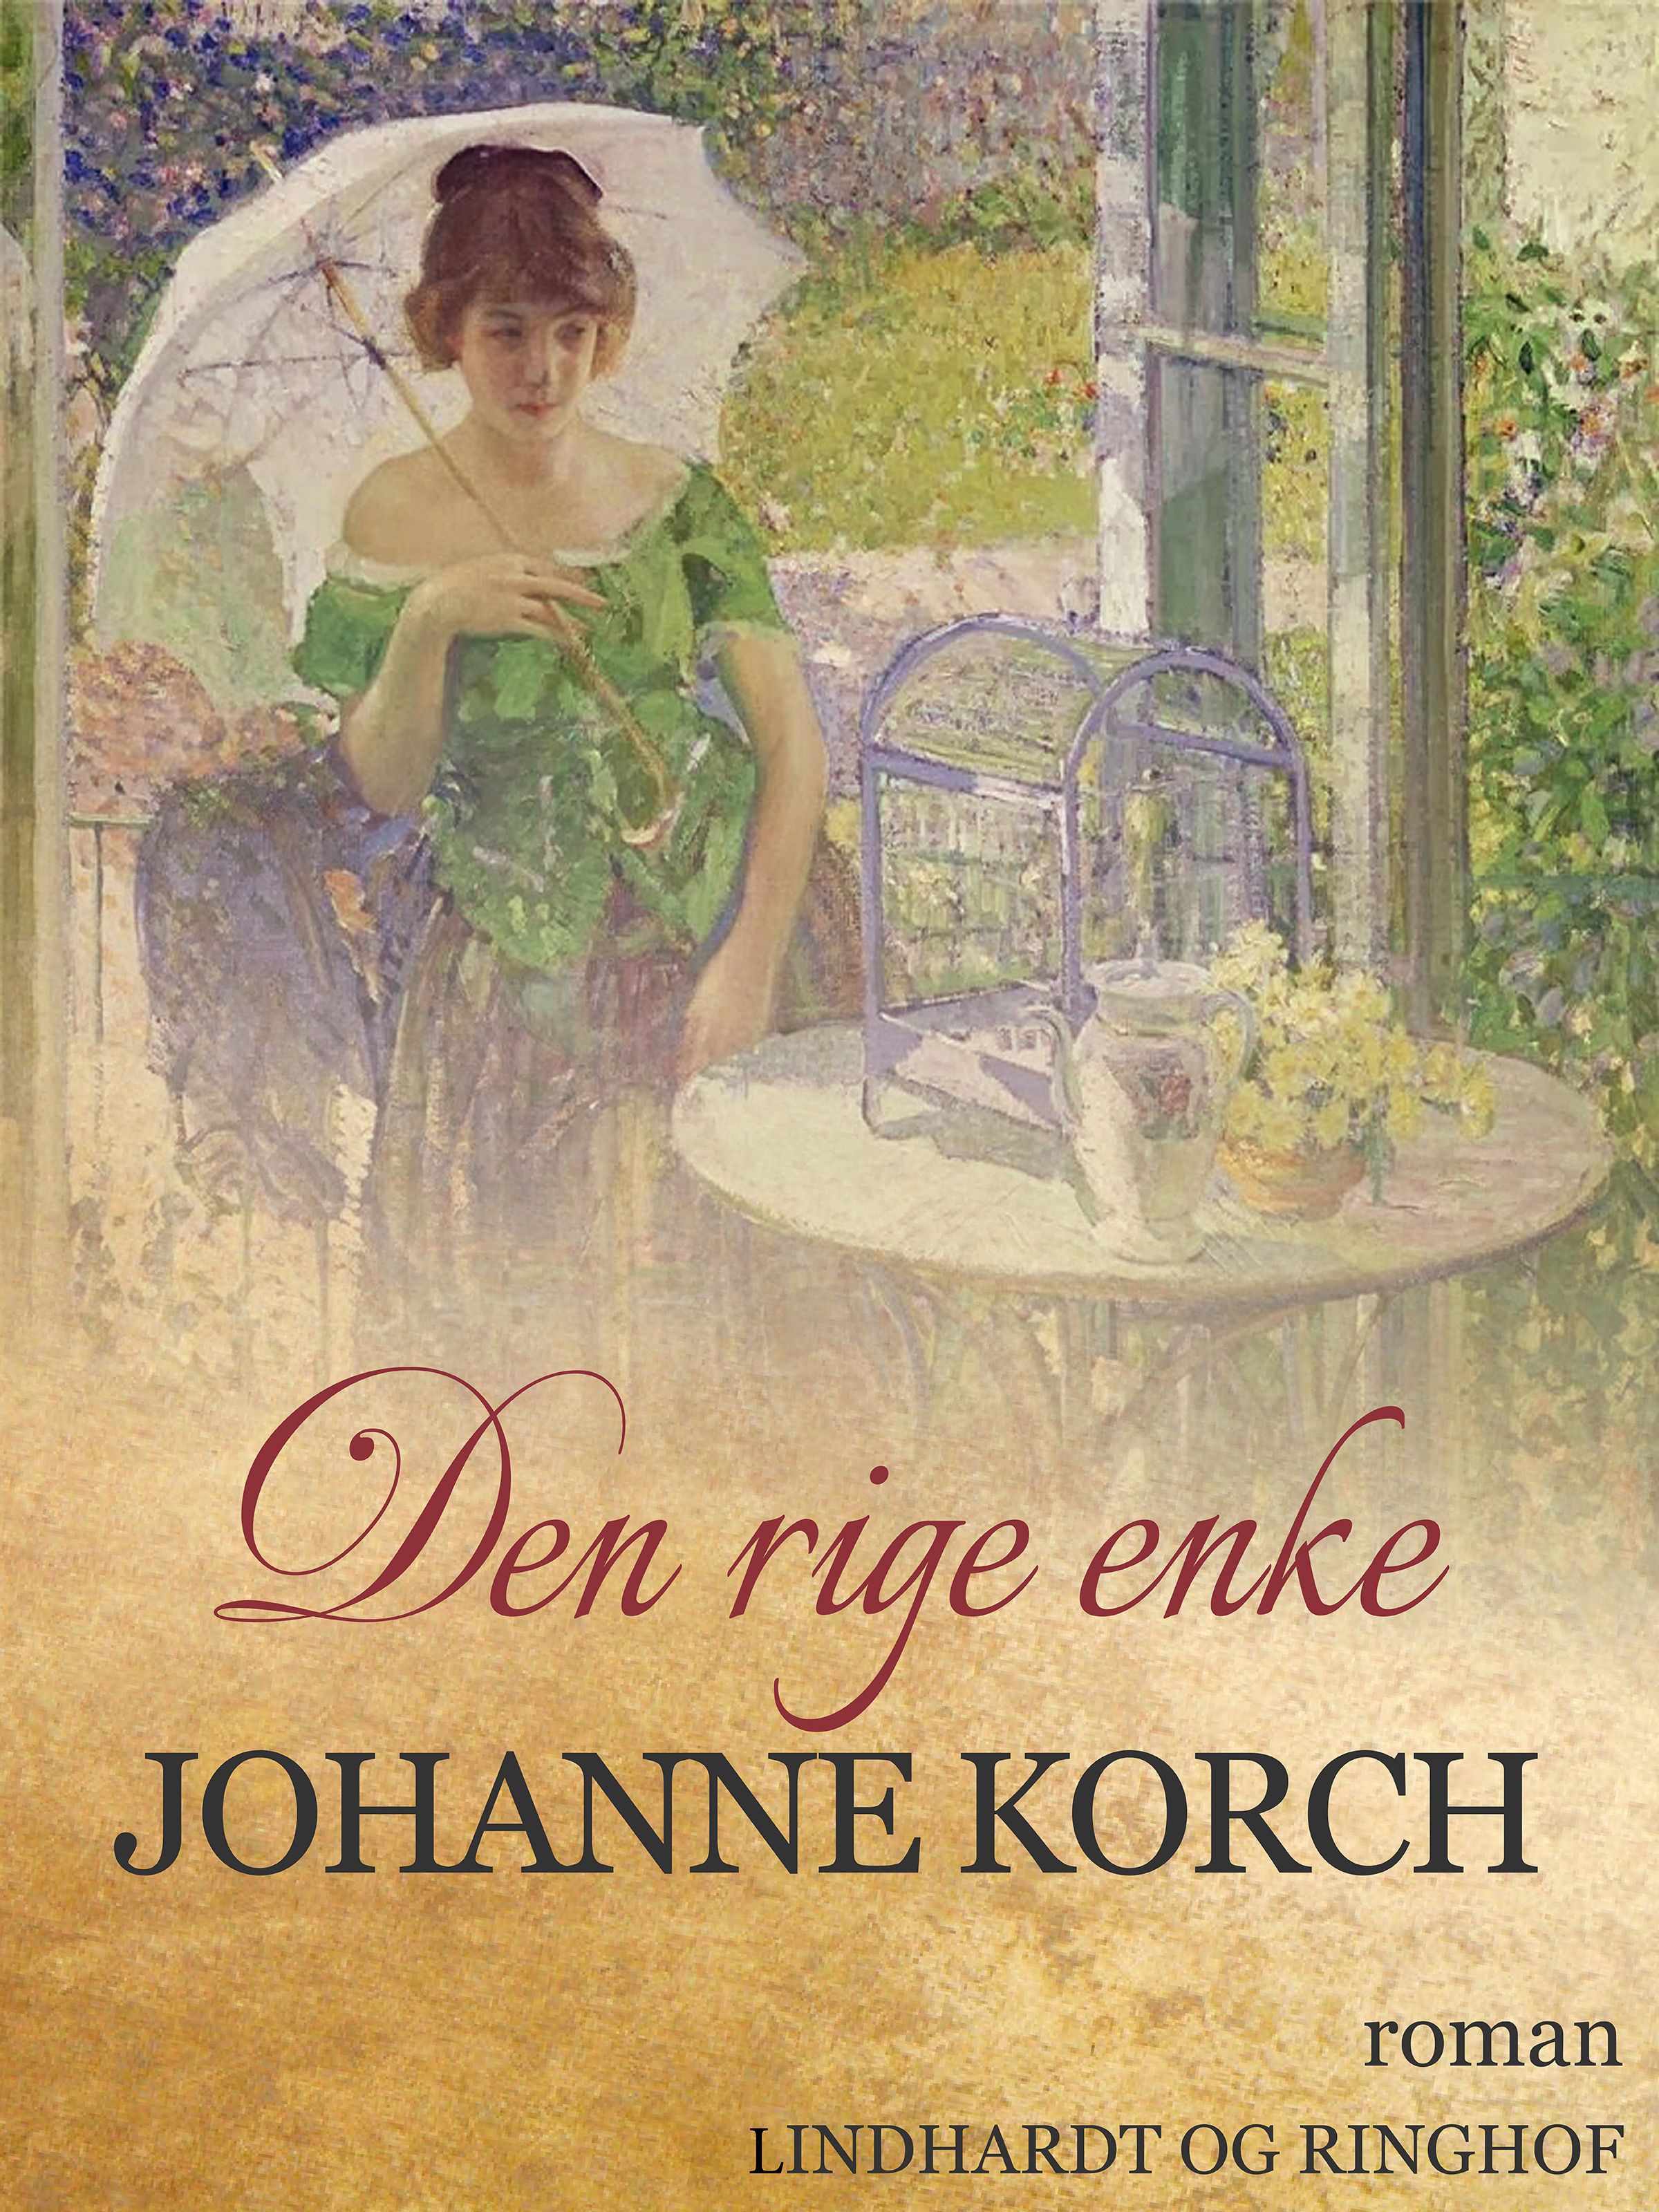 Den rige enke, ljudbok av Johanne Korch